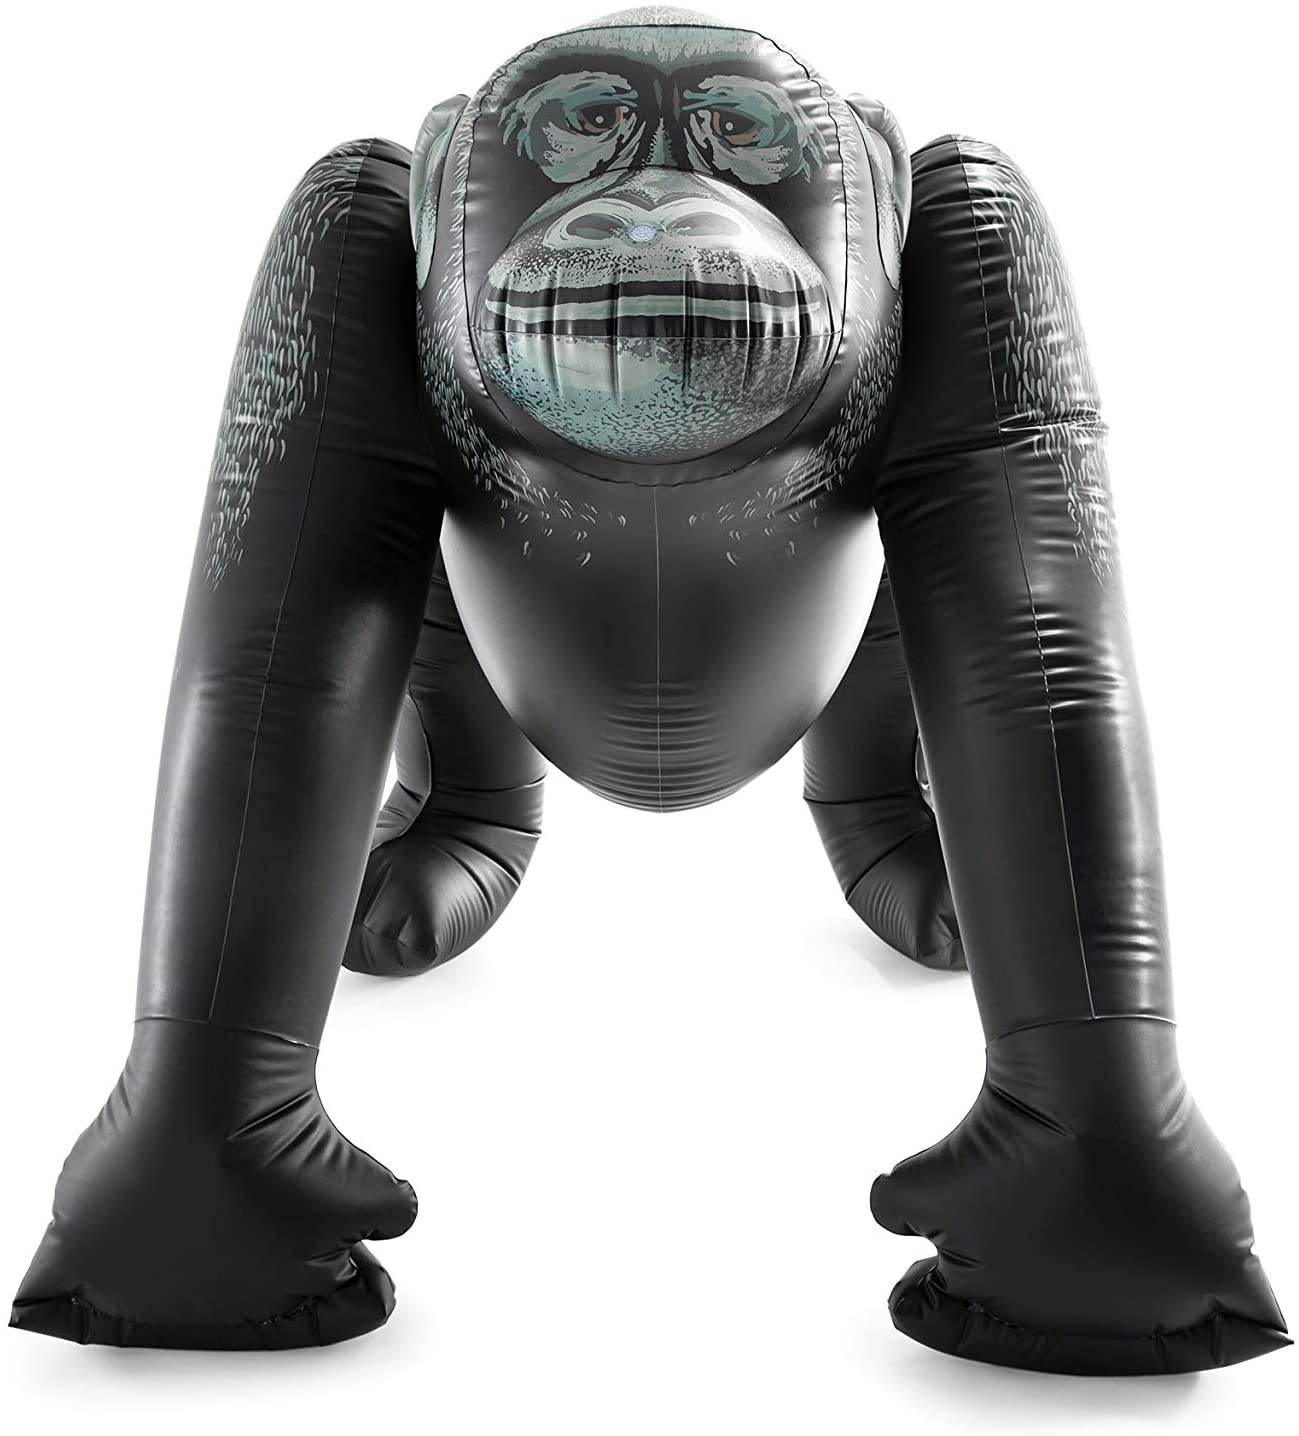 Giant Wasserspielzeug, (170x170x185cm) Gorilla - Sprinkler INTEX schwarz